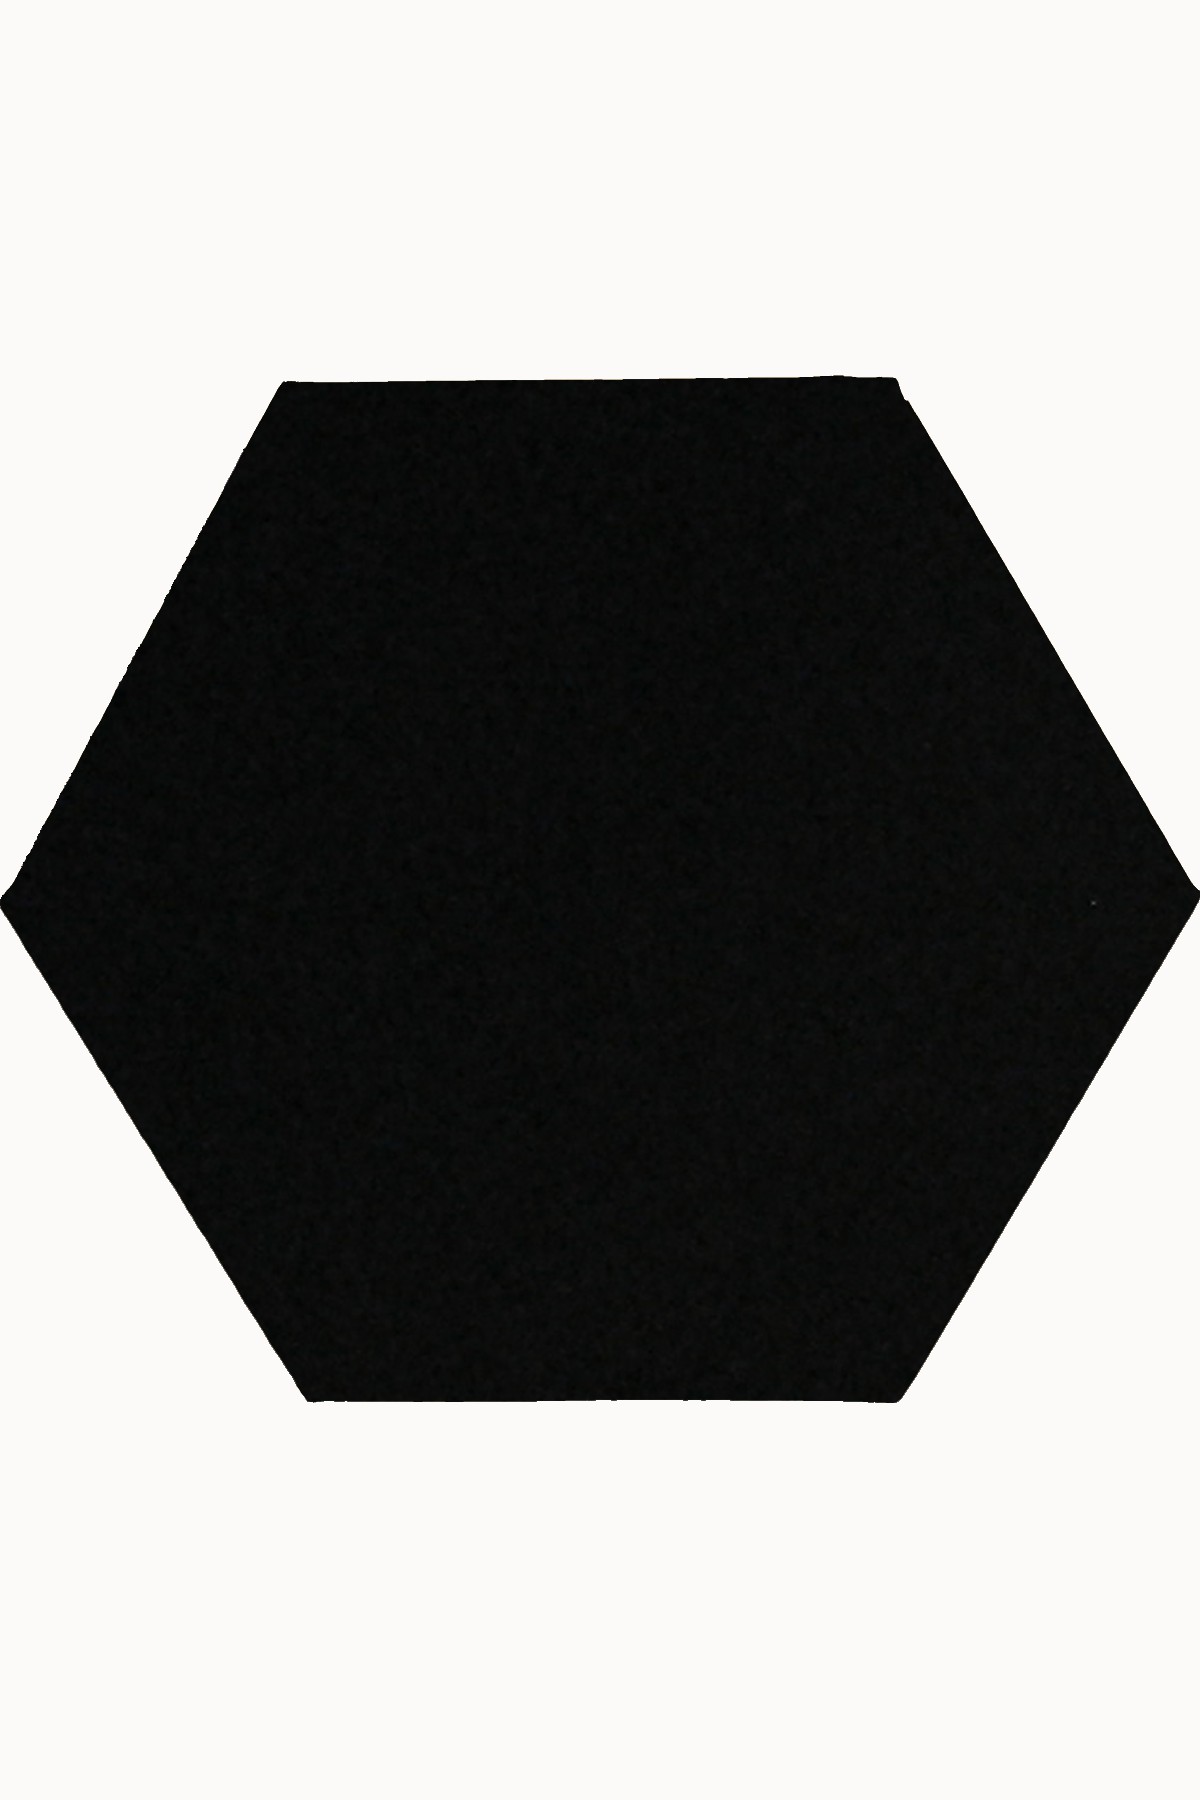 40x40 Cm Altıgen Tuval-Siyah (364 gr/m² - 2 Cm)